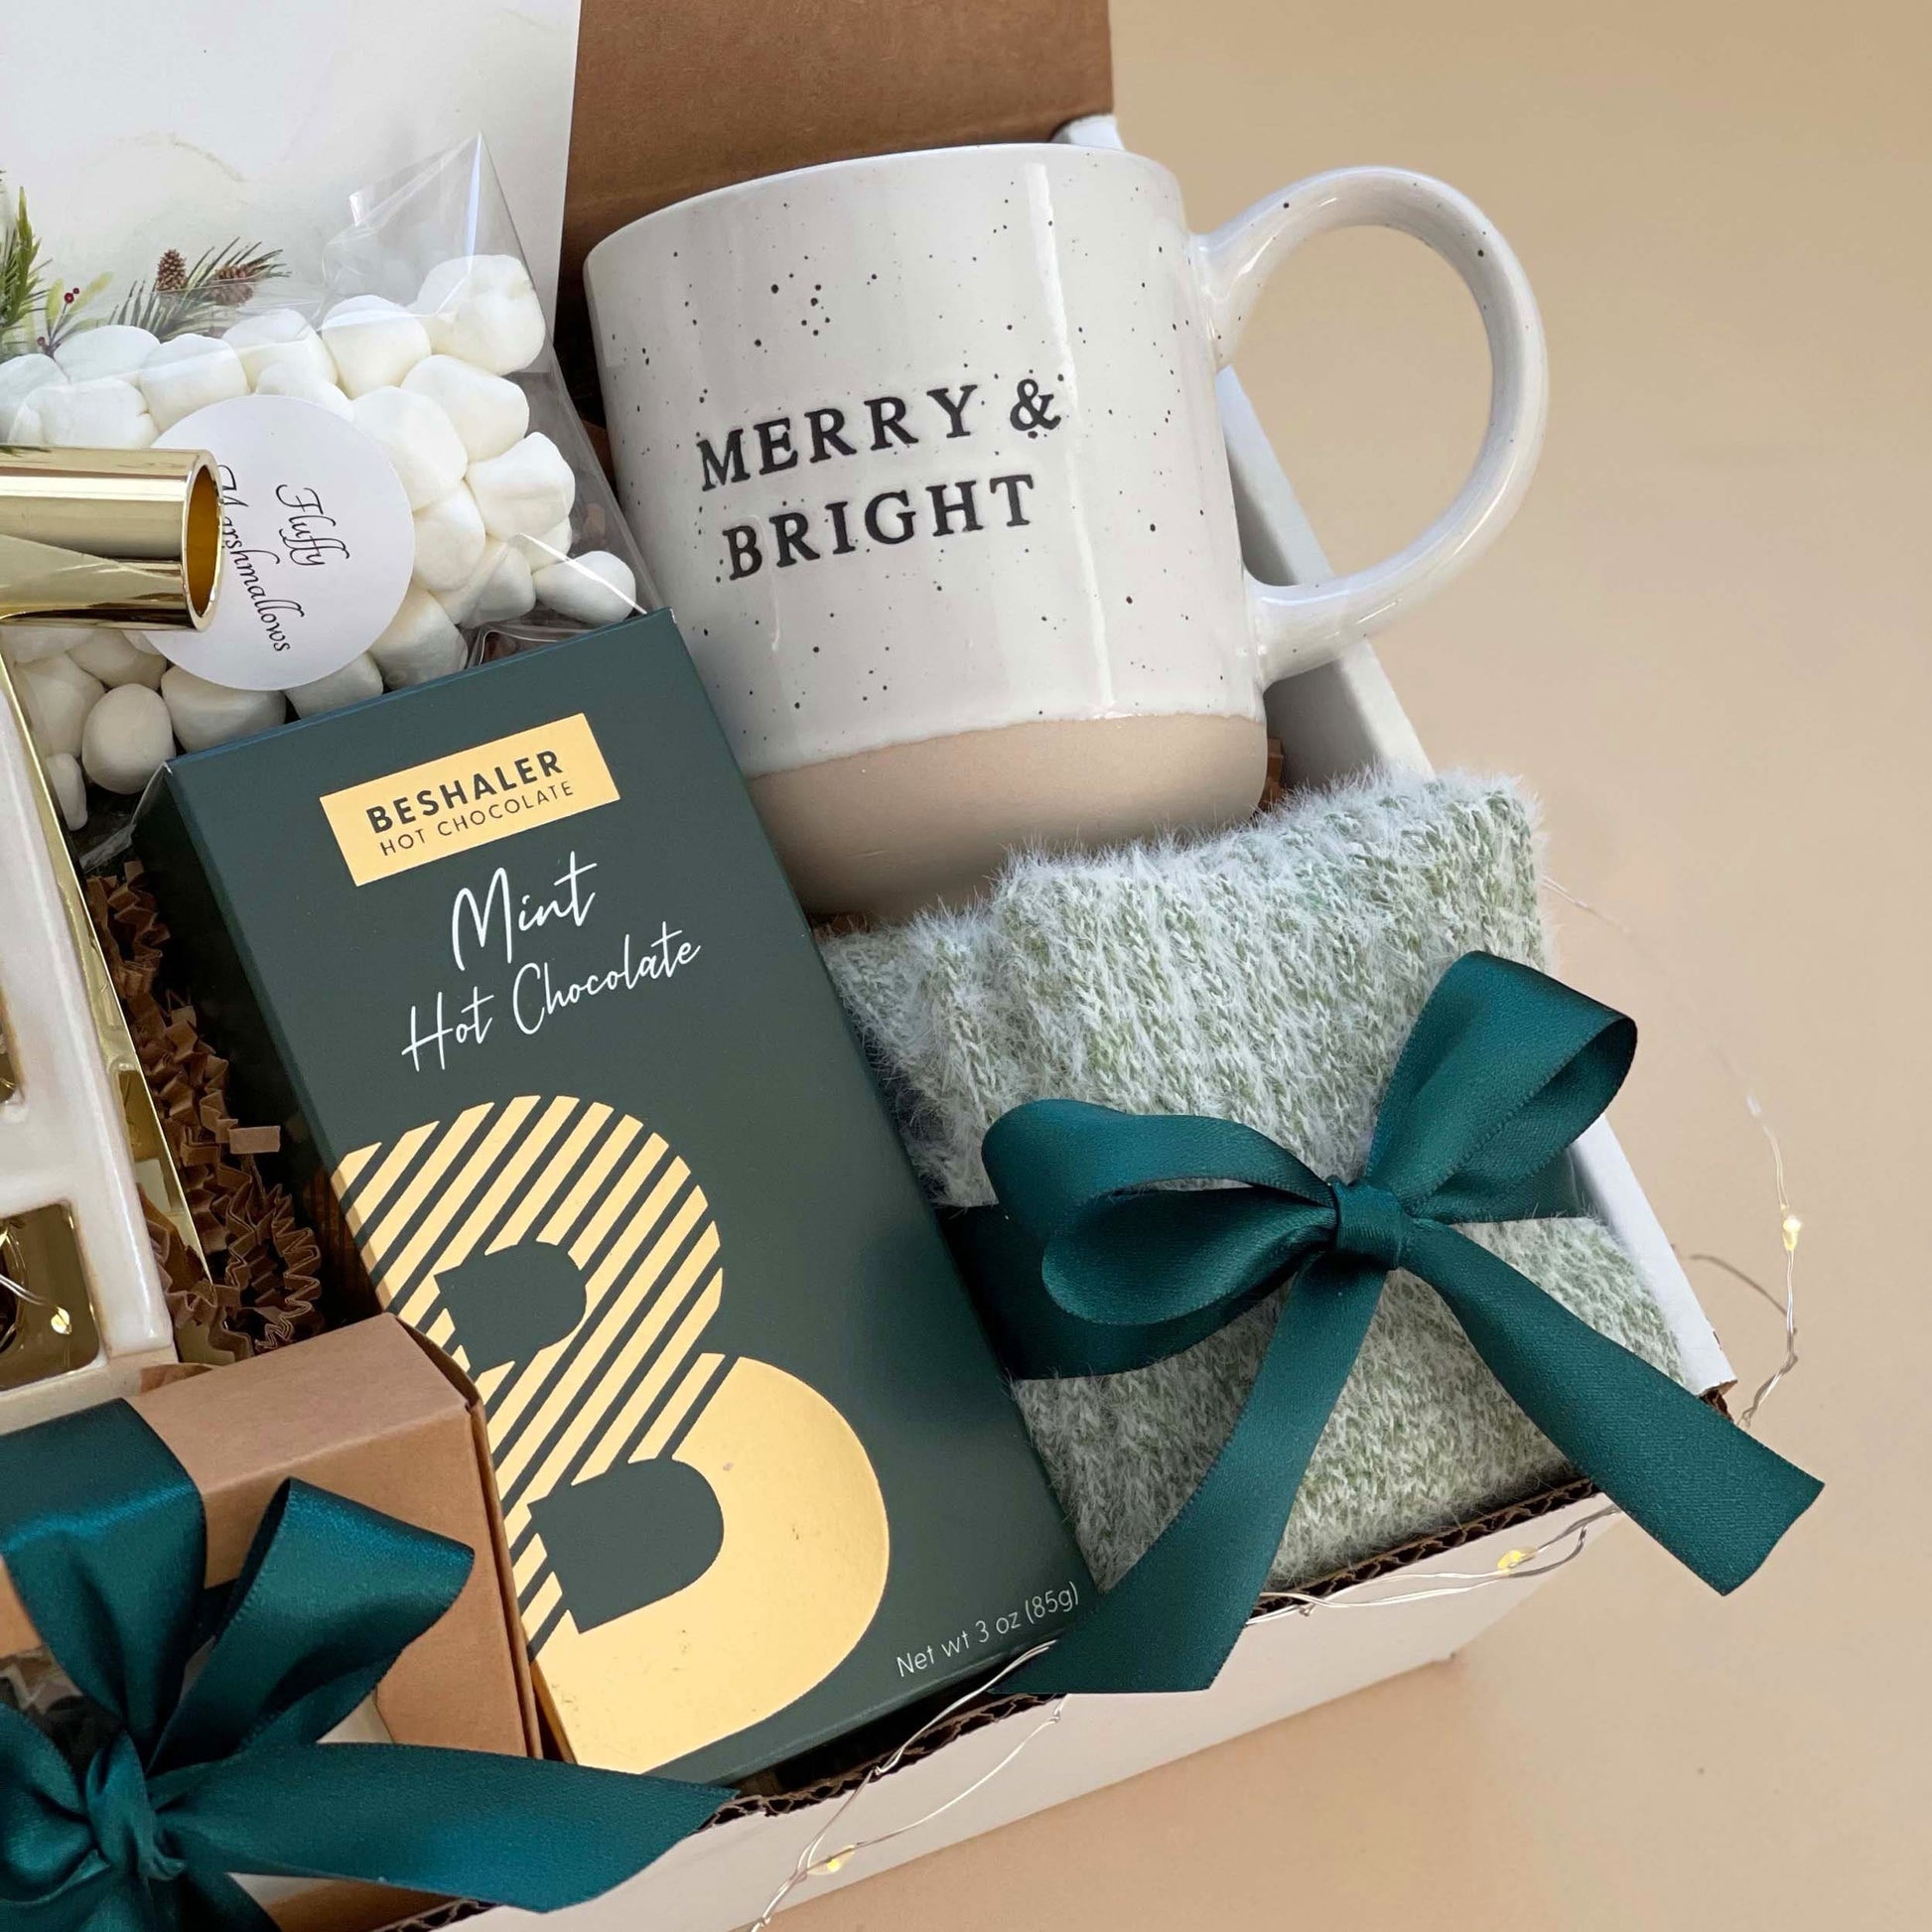 Hot Cocoa Single Serve Cup Gift Box